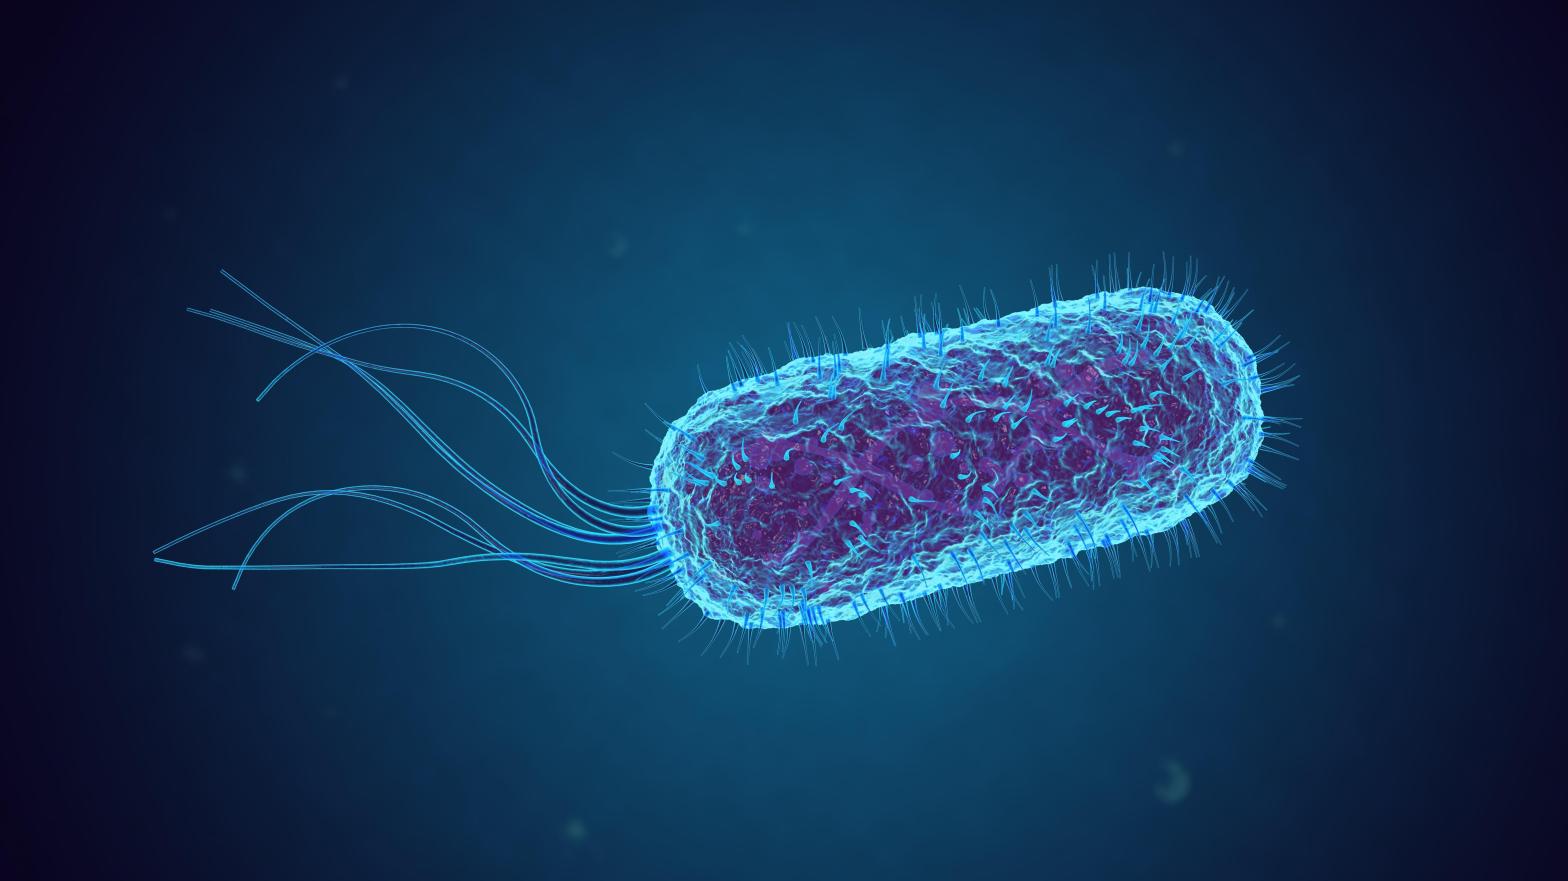 An illustration of E. coli bacteria. (Illustration: fusebulb, Shutterstock)